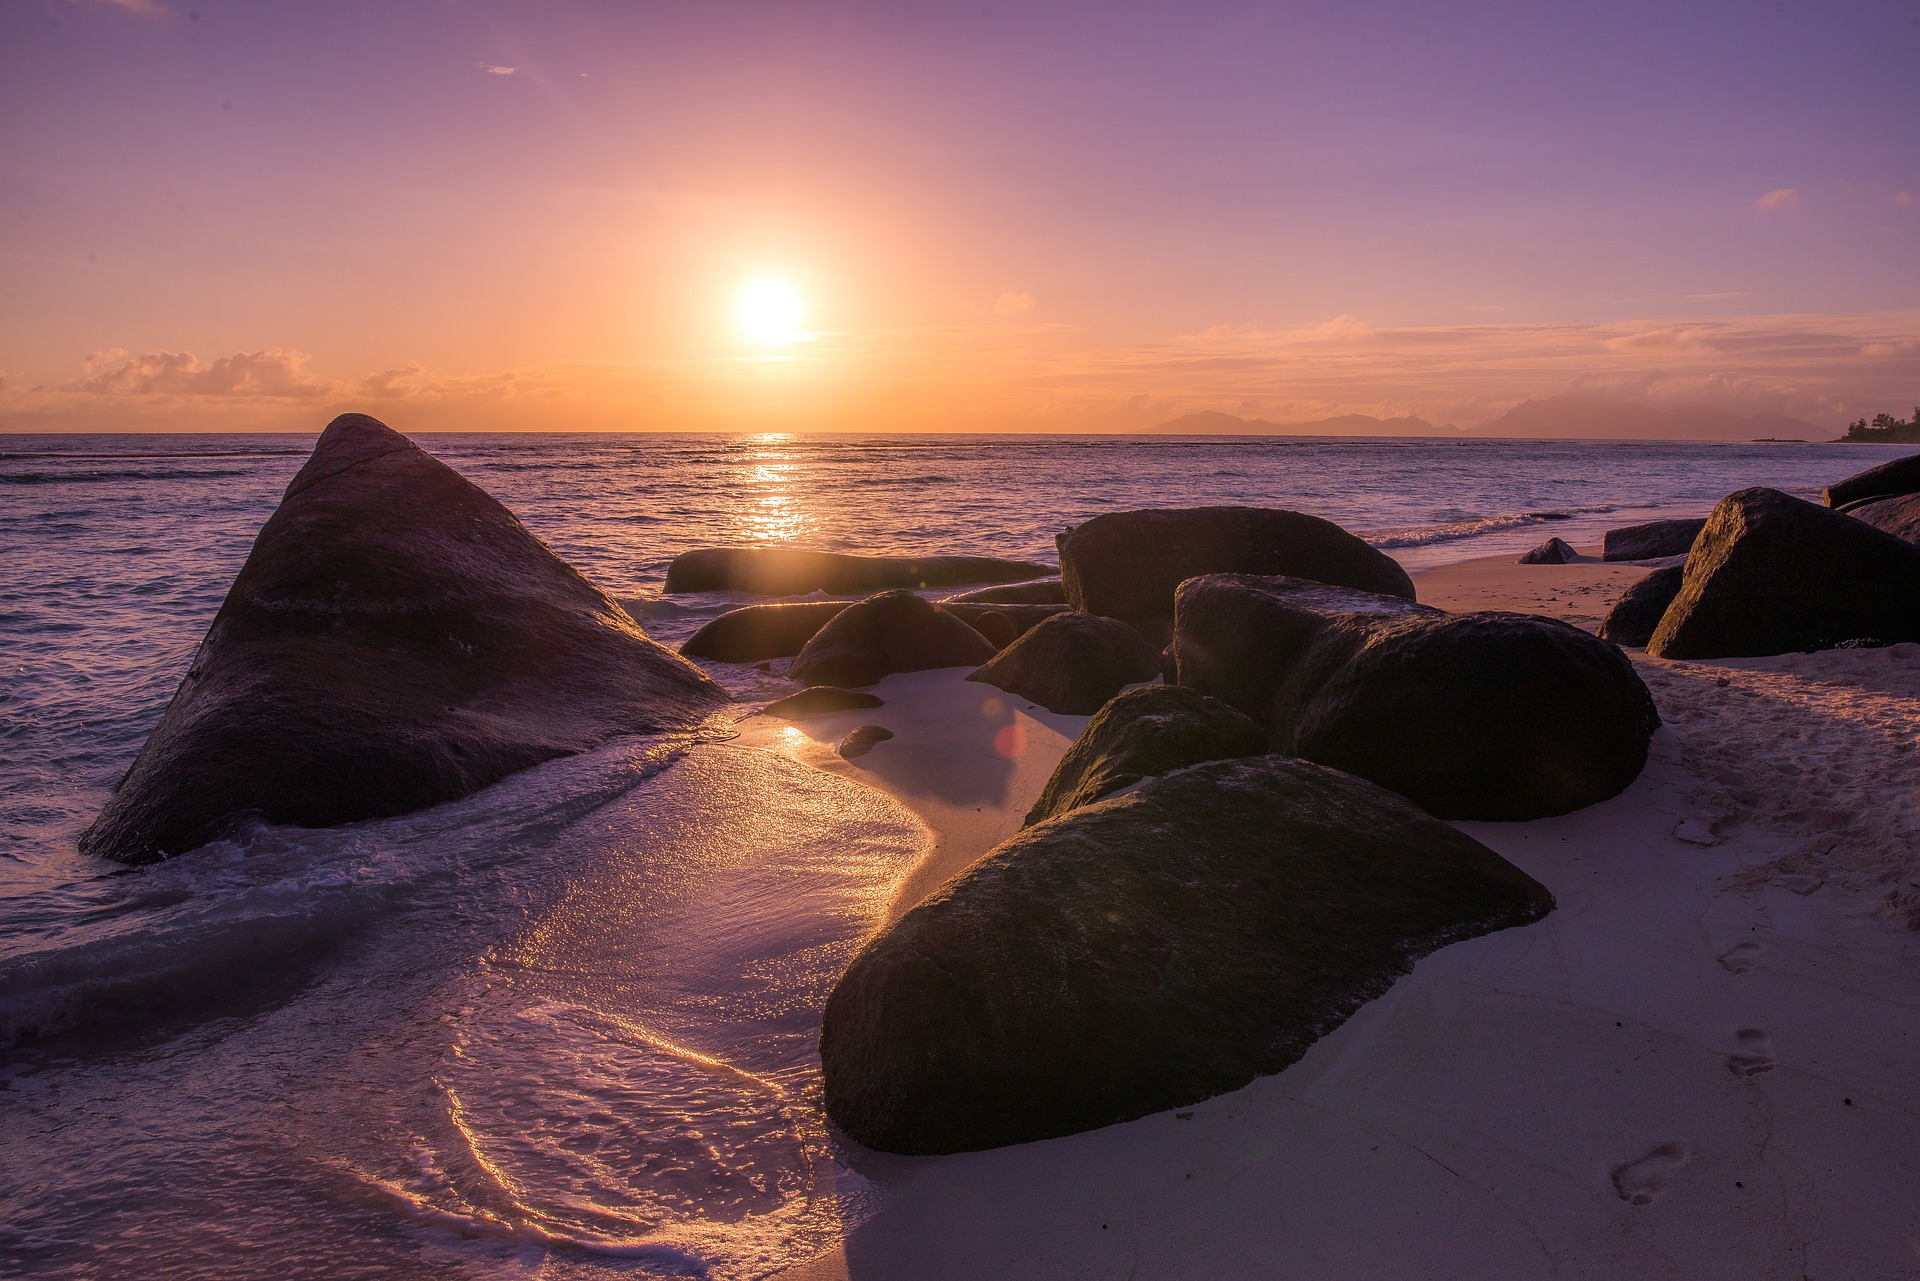 Sunrise over a rocky beach in the Seychelles